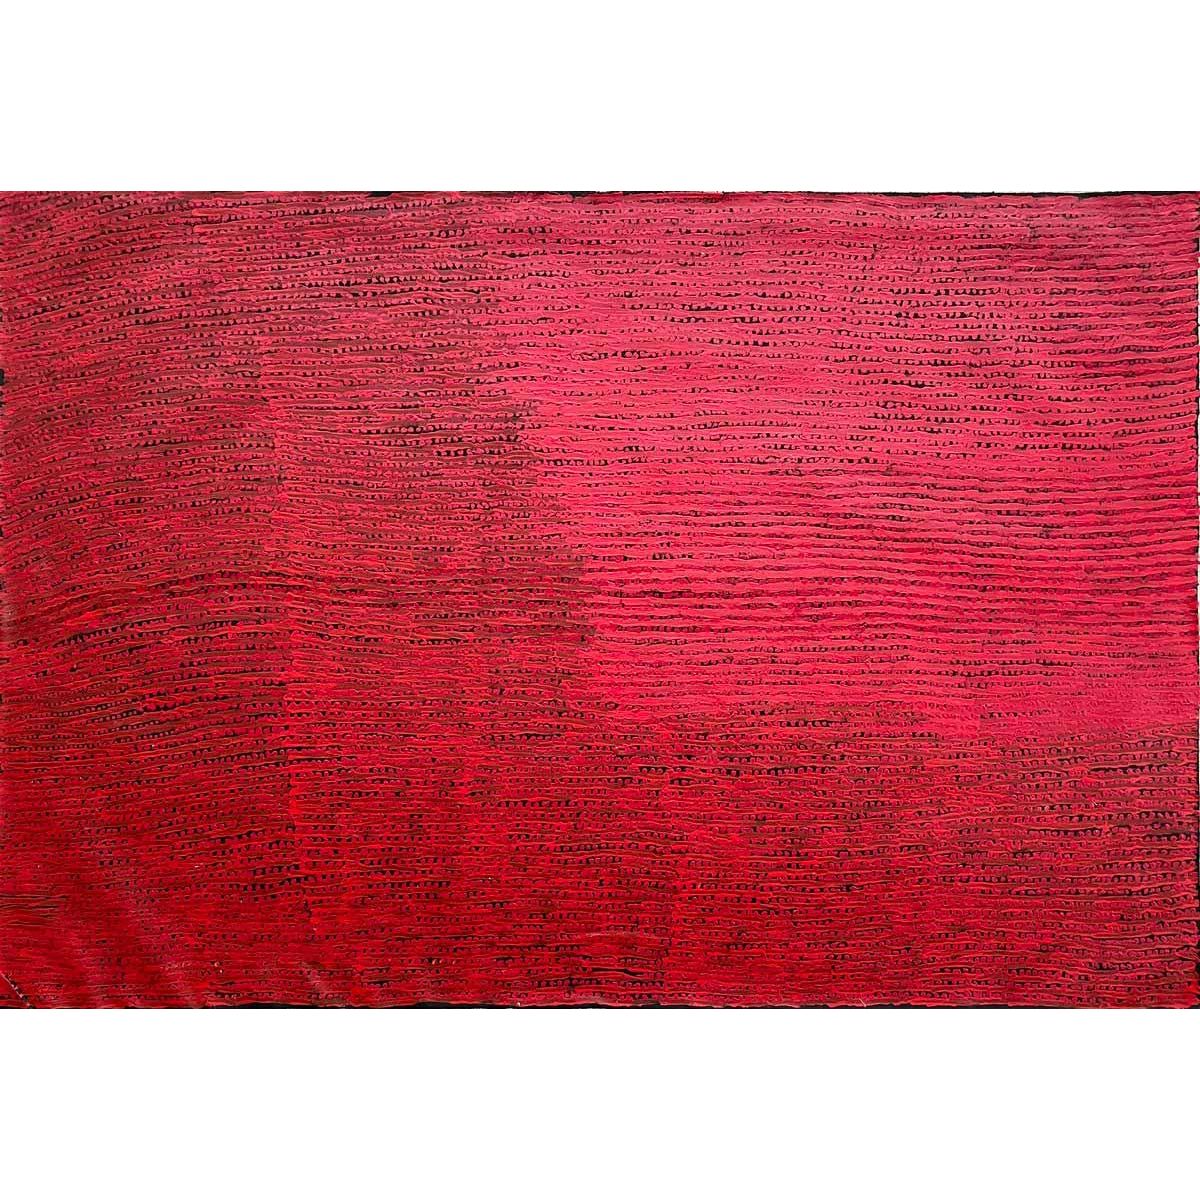 Willy Tjungurrayi | Kaakuratintja (Lake McDonald) A11335 - Mitchell Fine Art